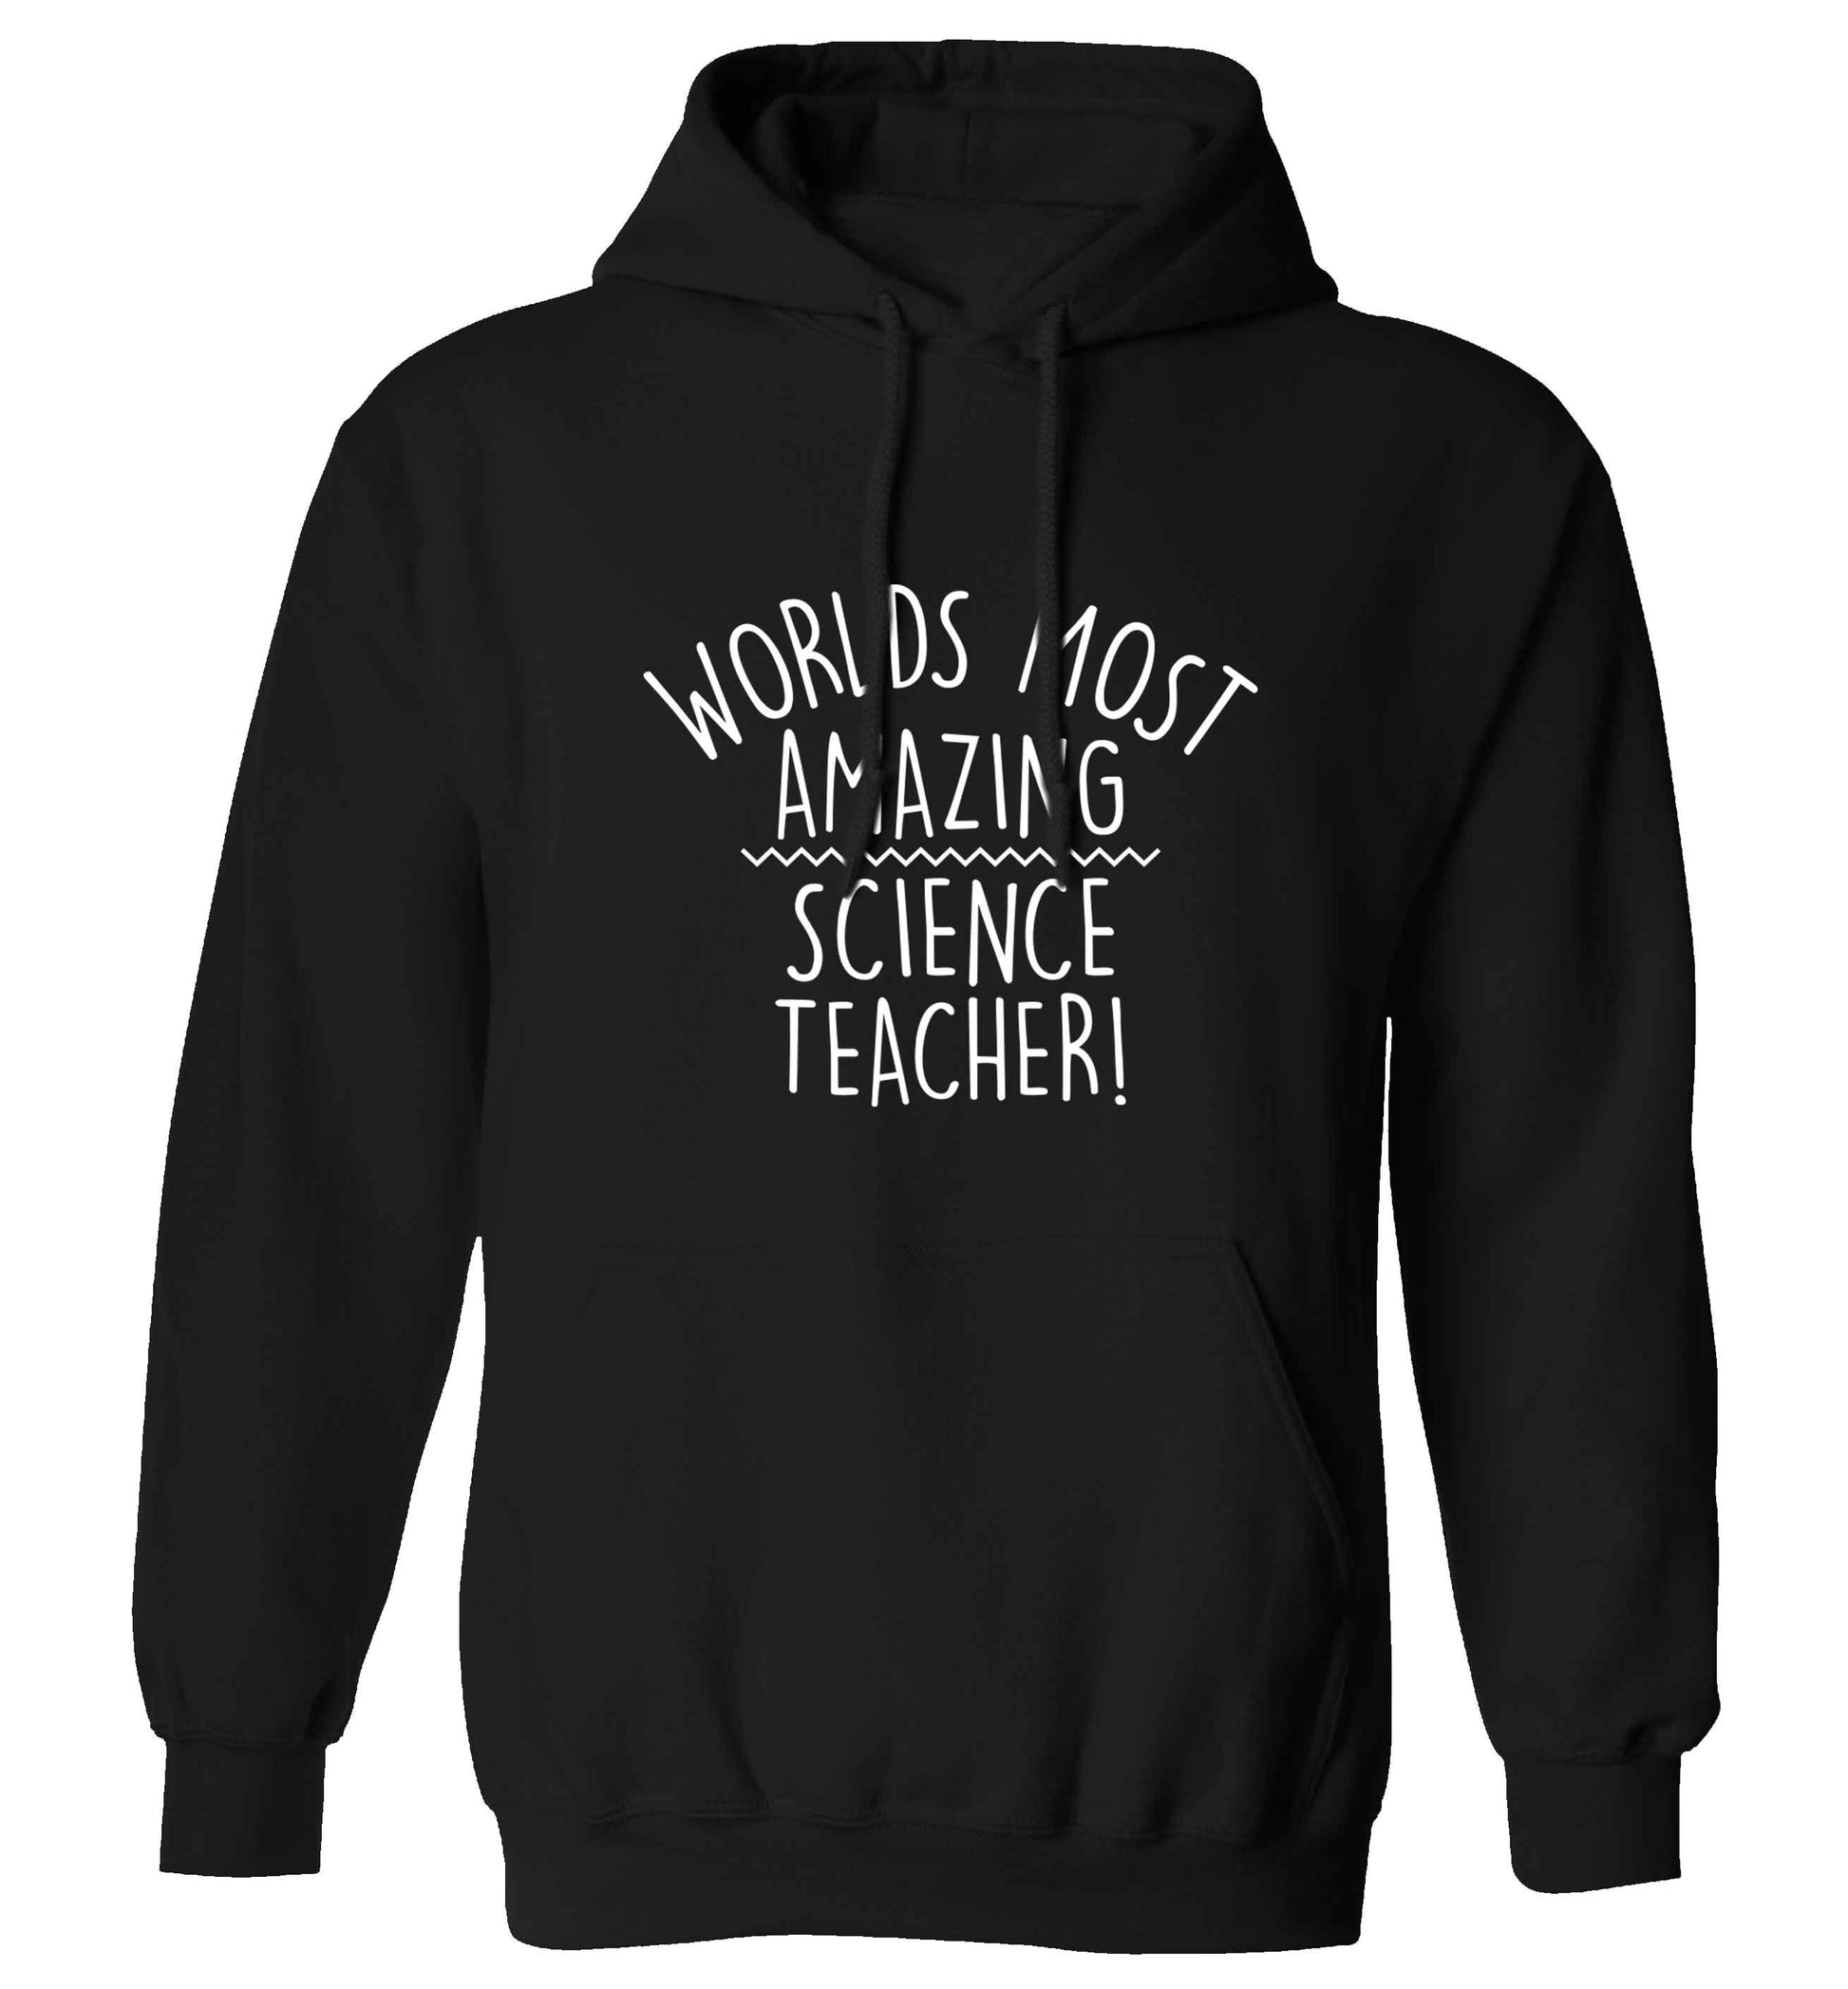 Worlds most amazing science teacher adults unisex black hoodie 2XL